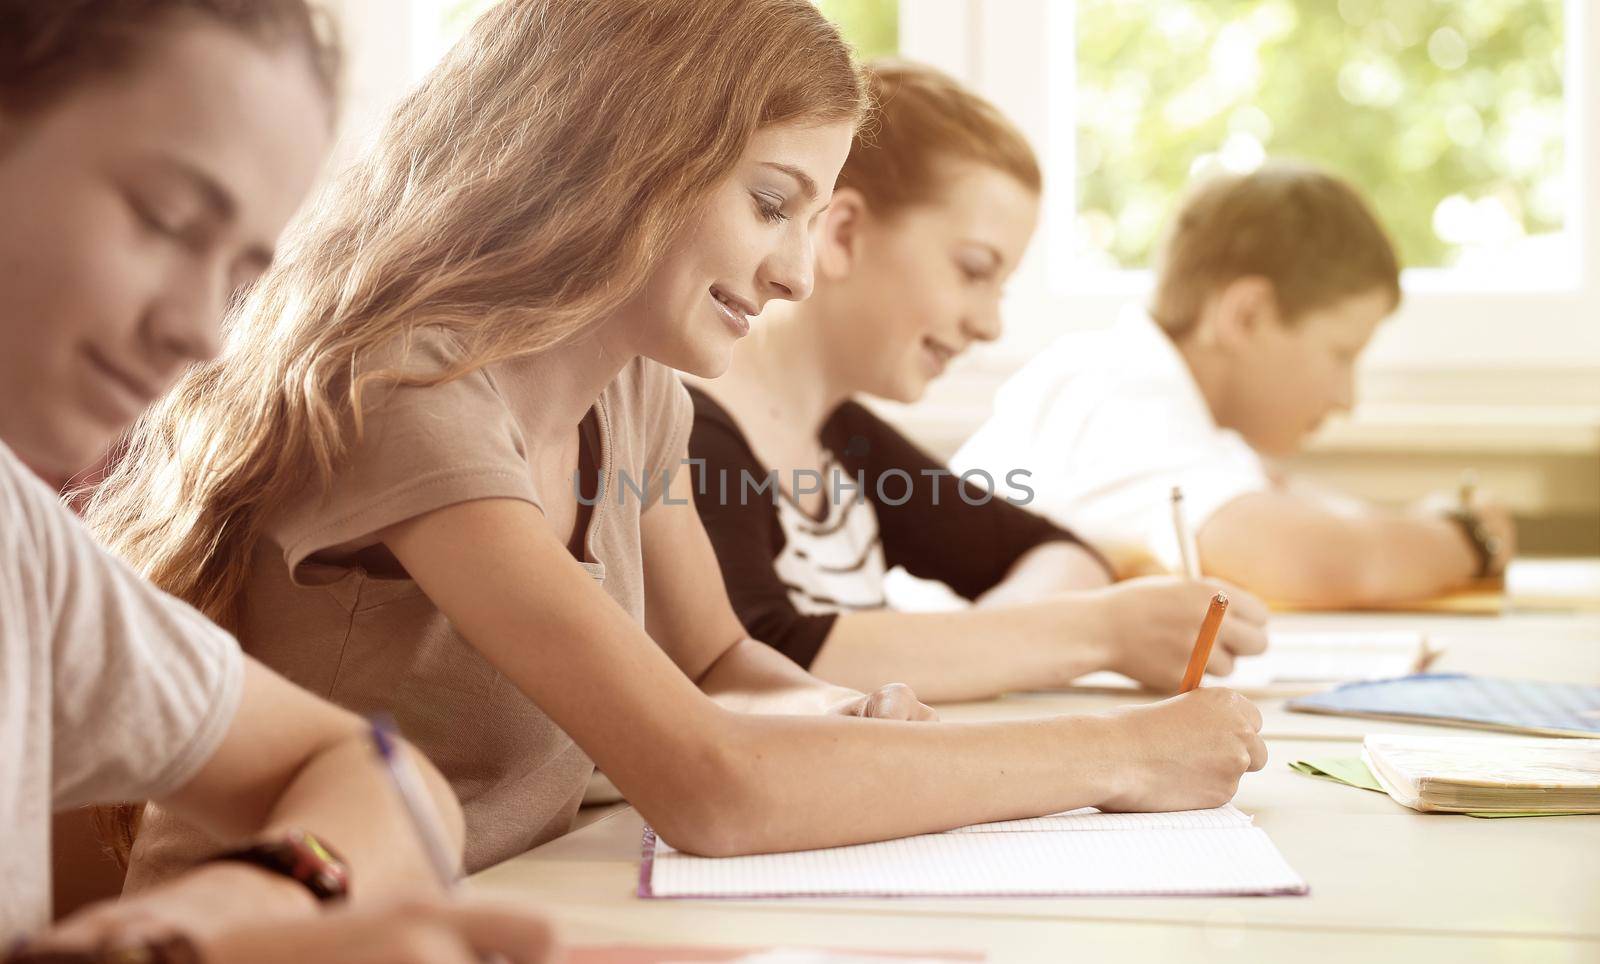 Students writing a test in school class by Kzenon